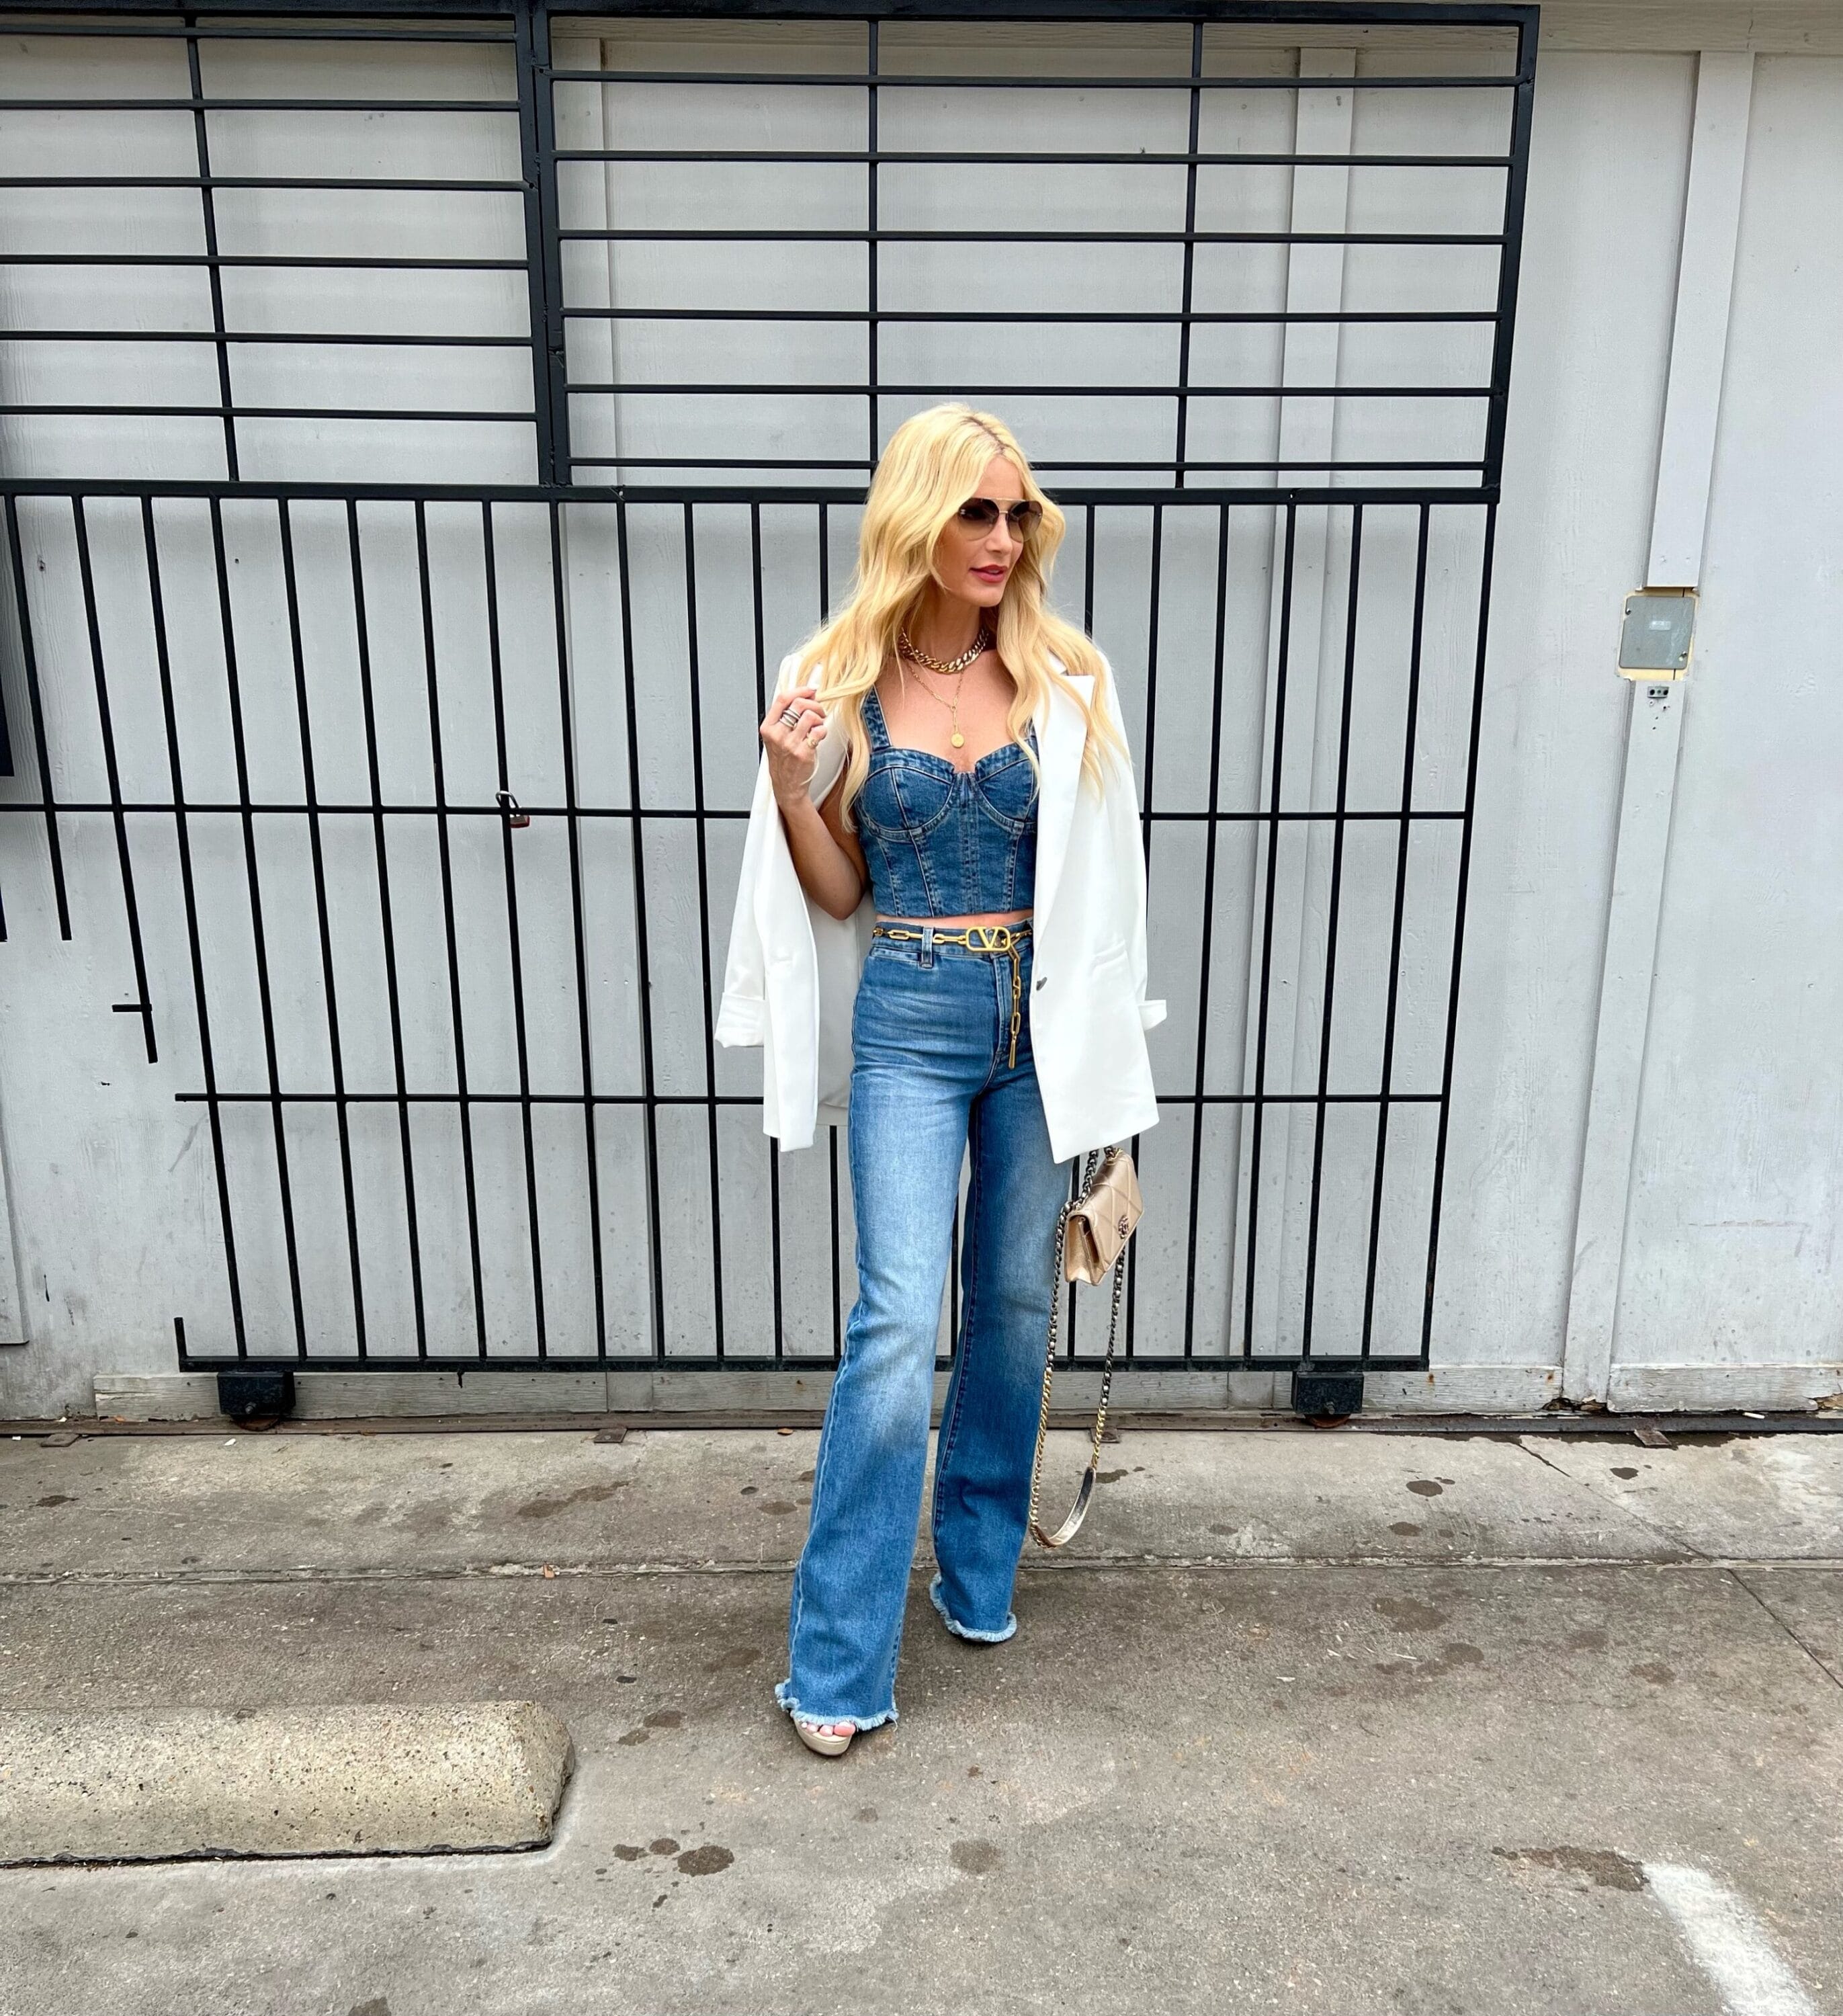 Dallas fashion blogger over 40 showcasing Items Classy women never wear